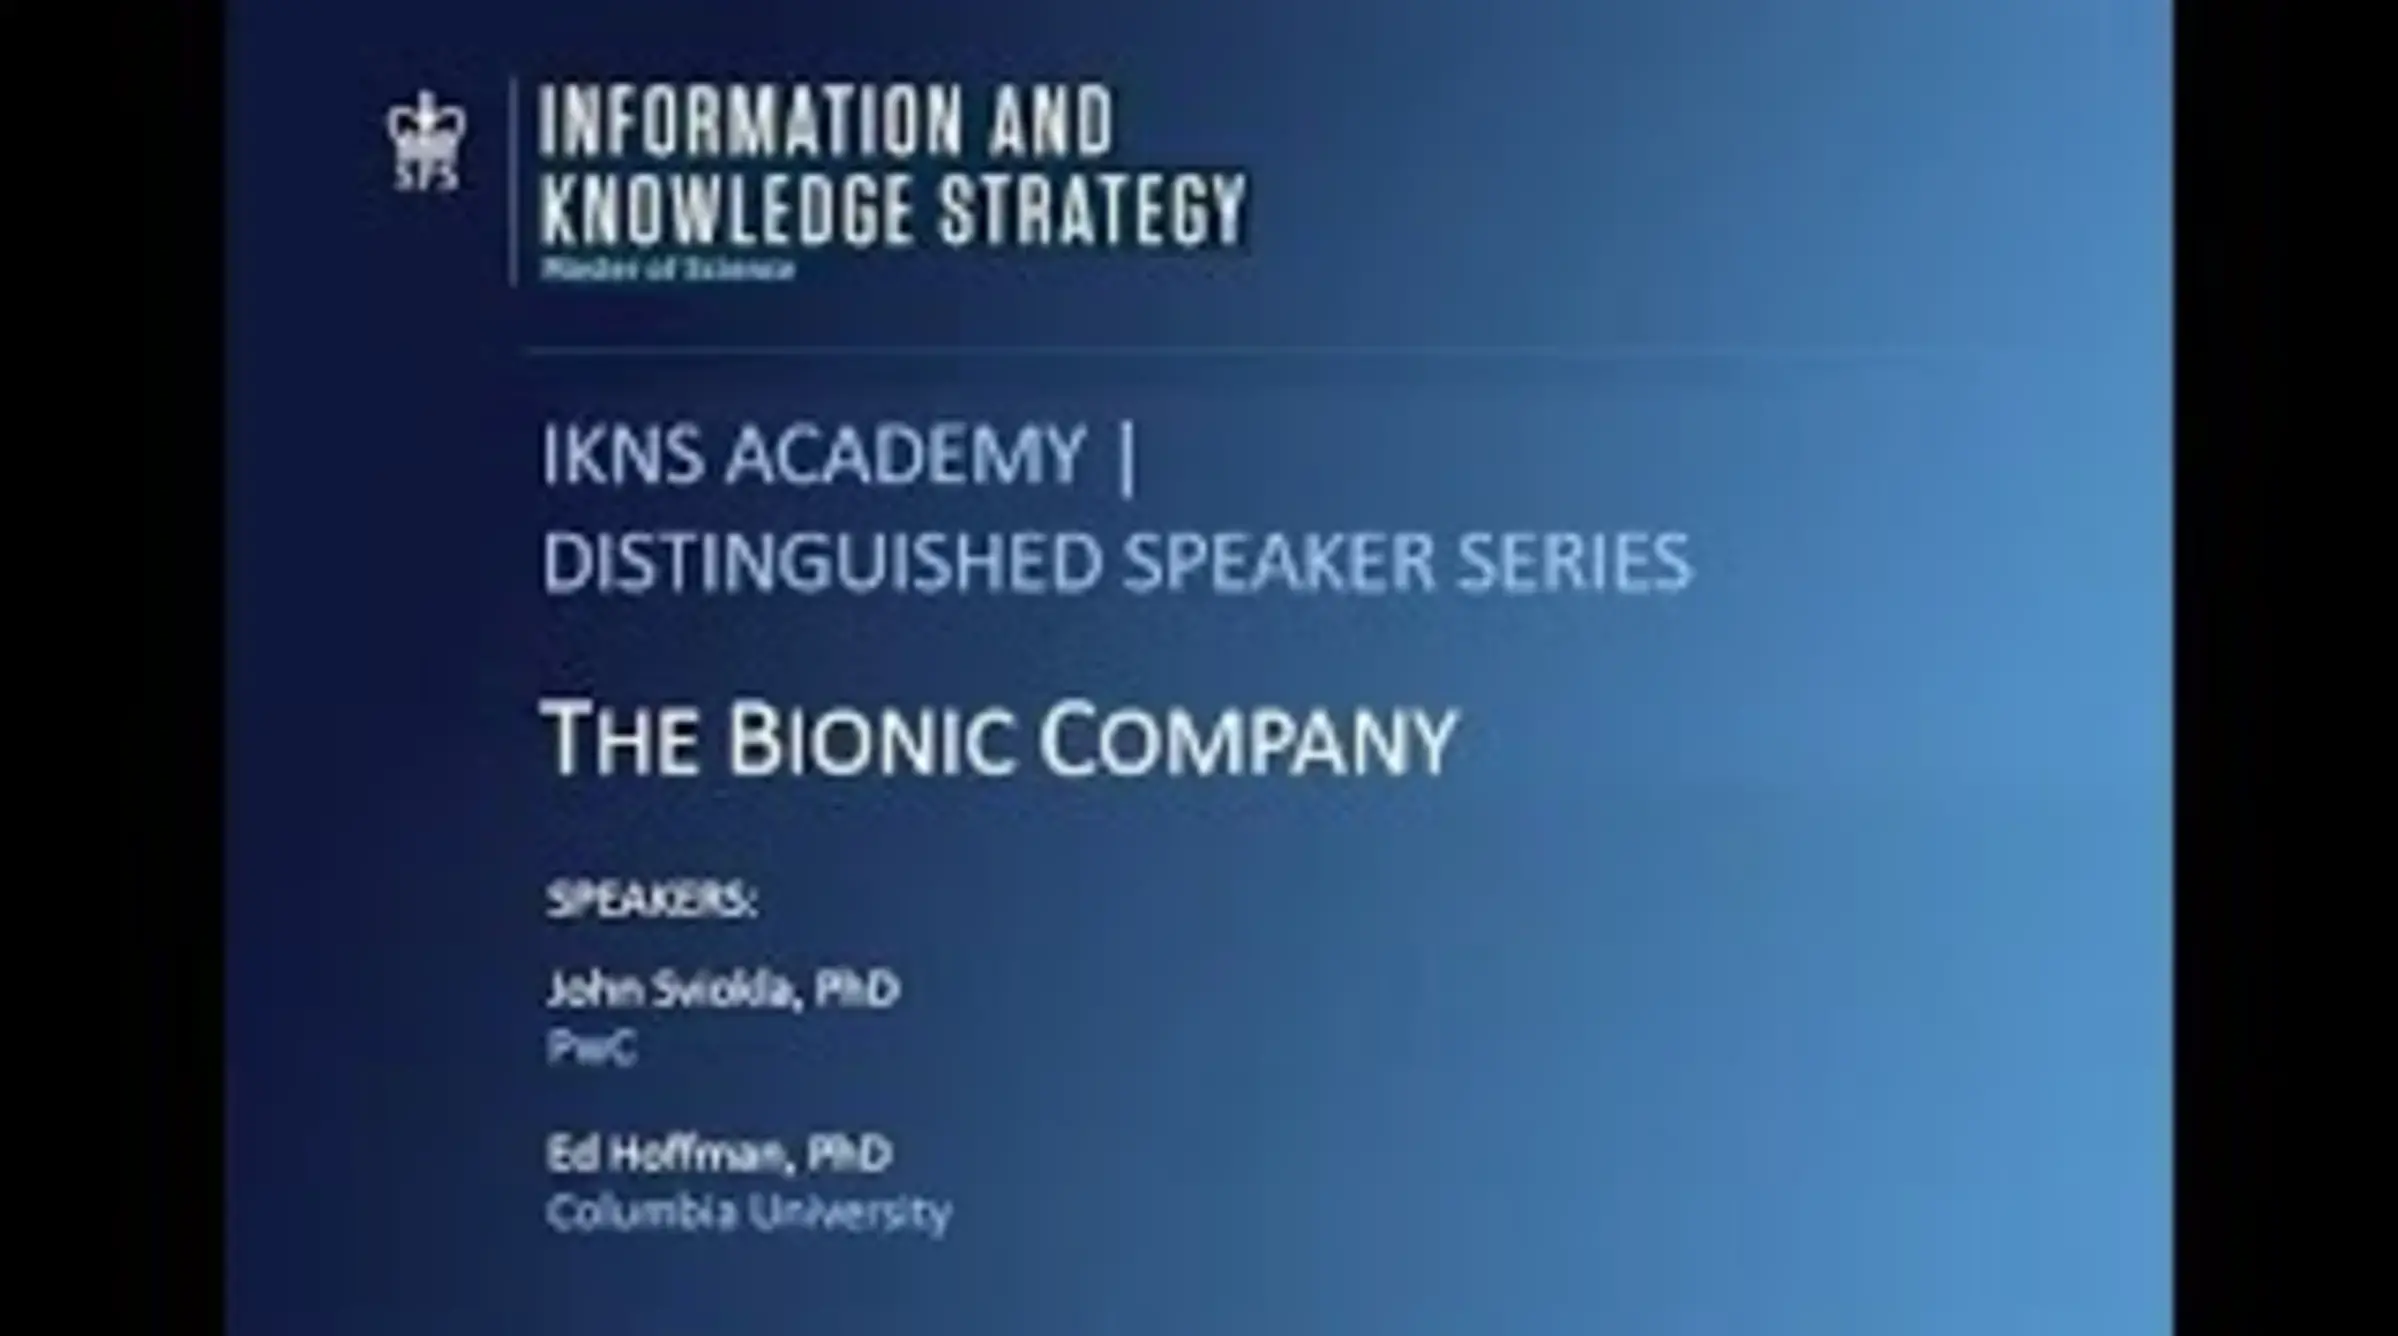 The Bionic Company